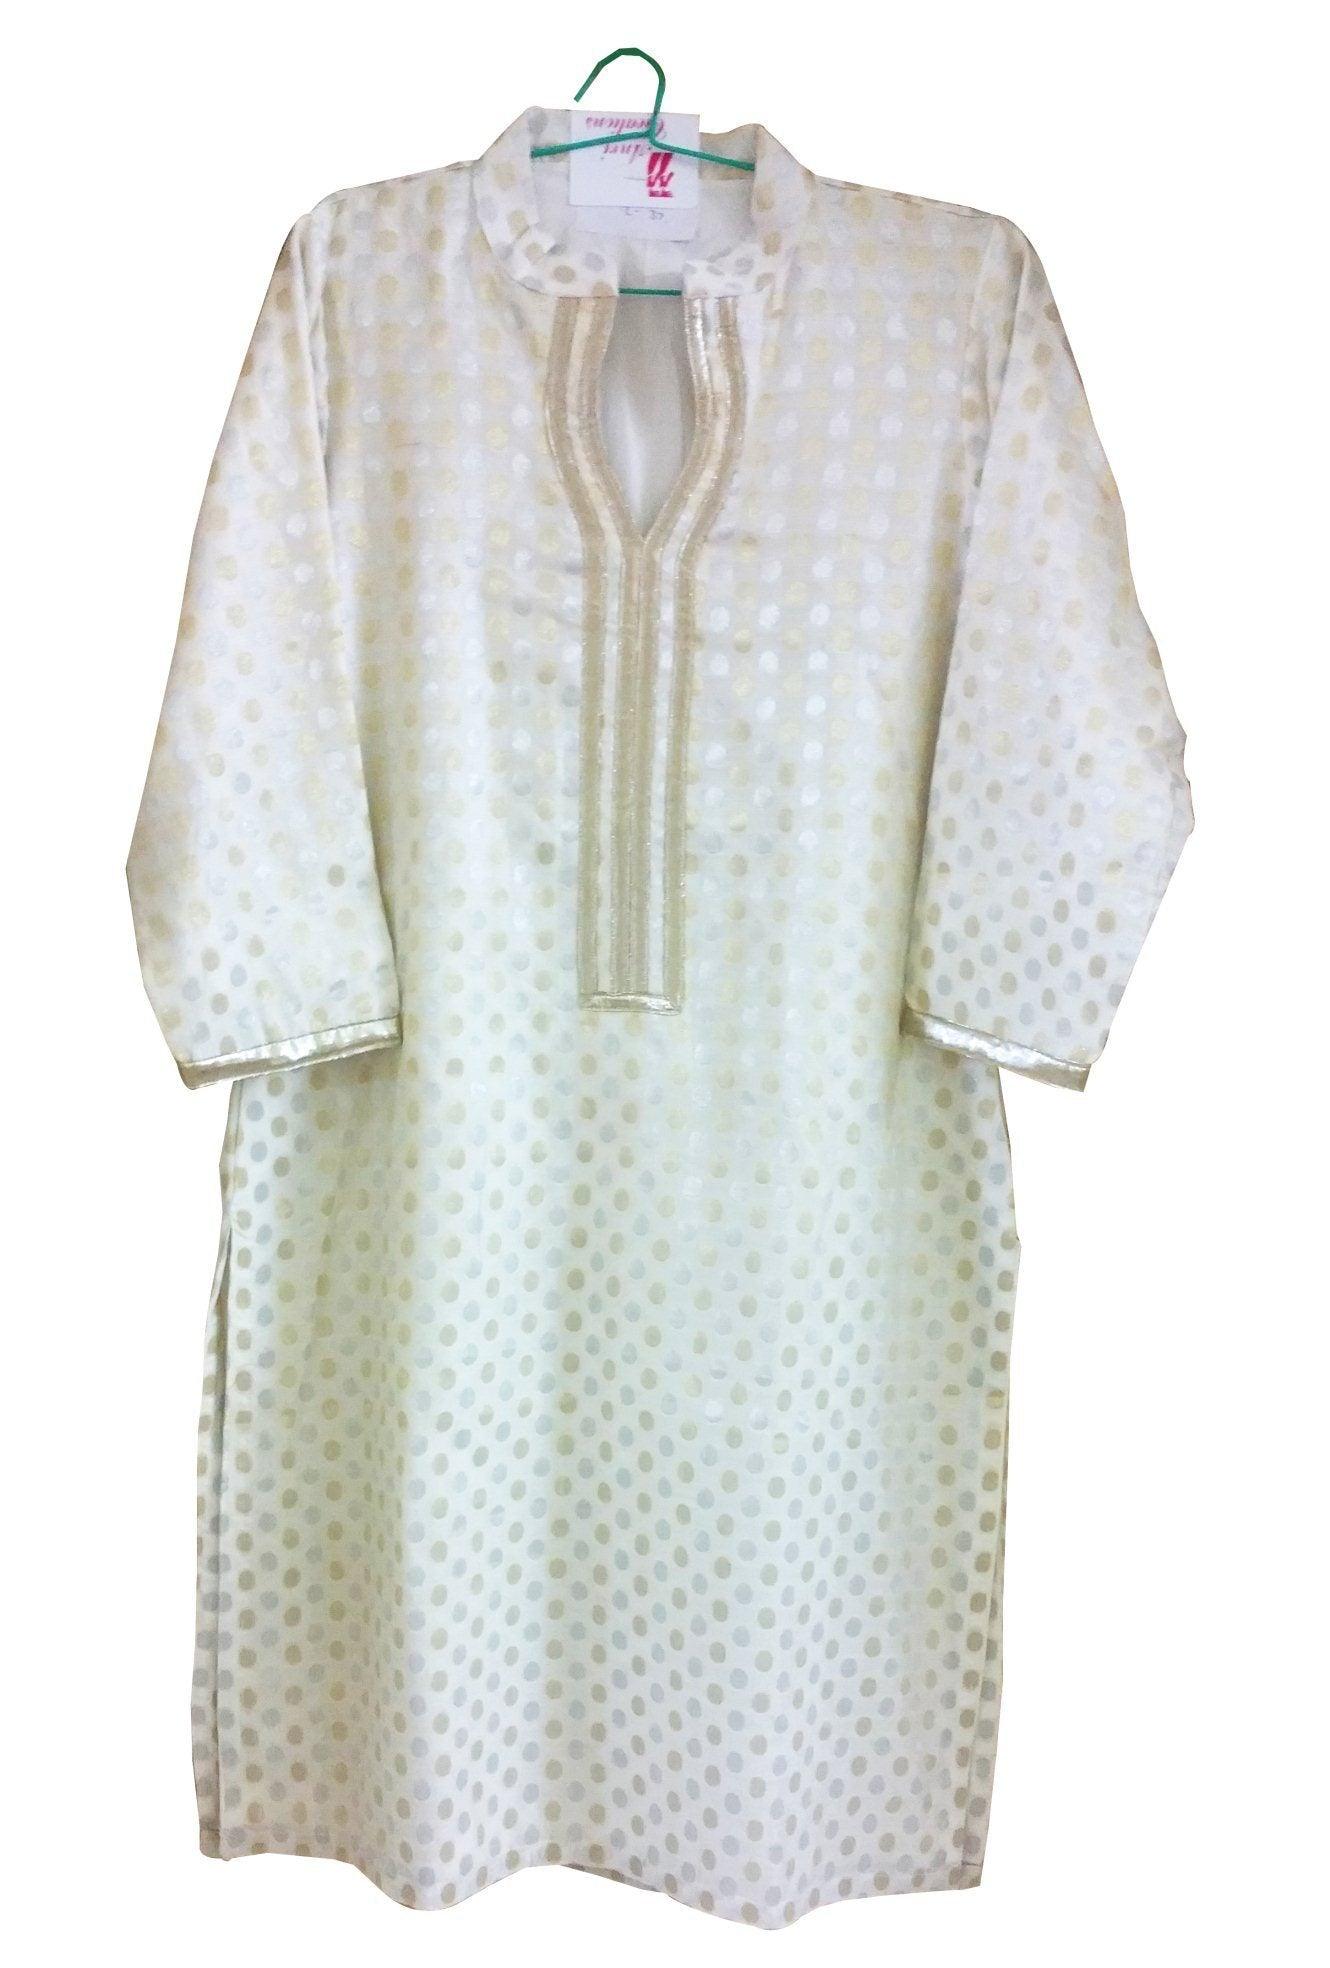 Off White Chanderi Cotton Stitched Top  Dress Size 38 ACC46-Anvi Creations-Kurta,Kurti,Top,Tunic